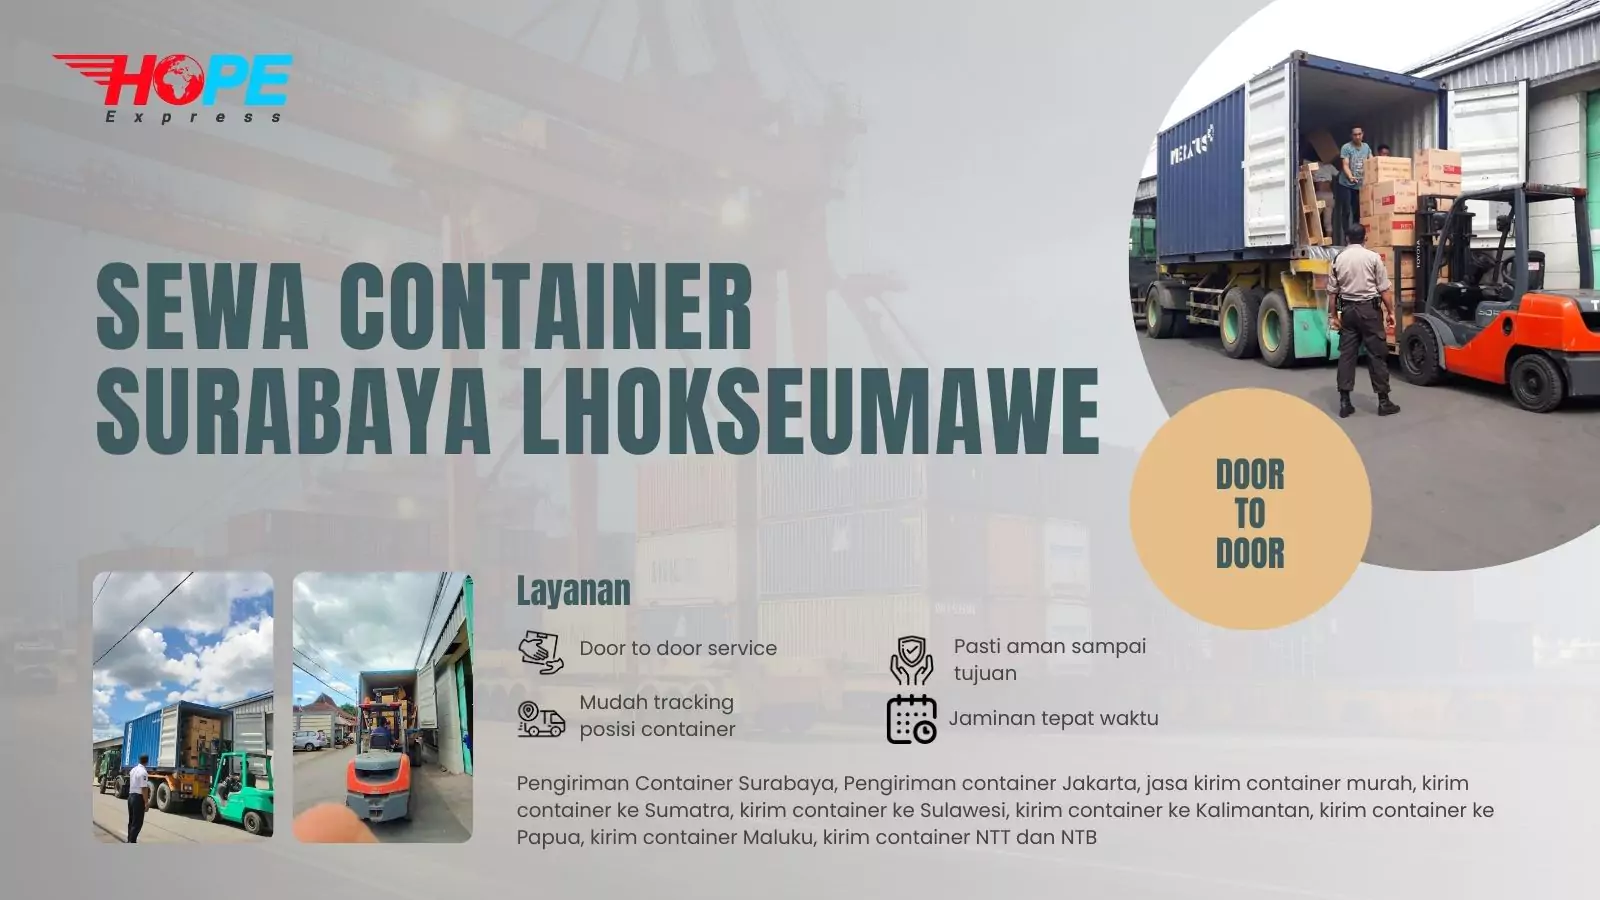 Sewa Container Surabaya Lhokseumawe